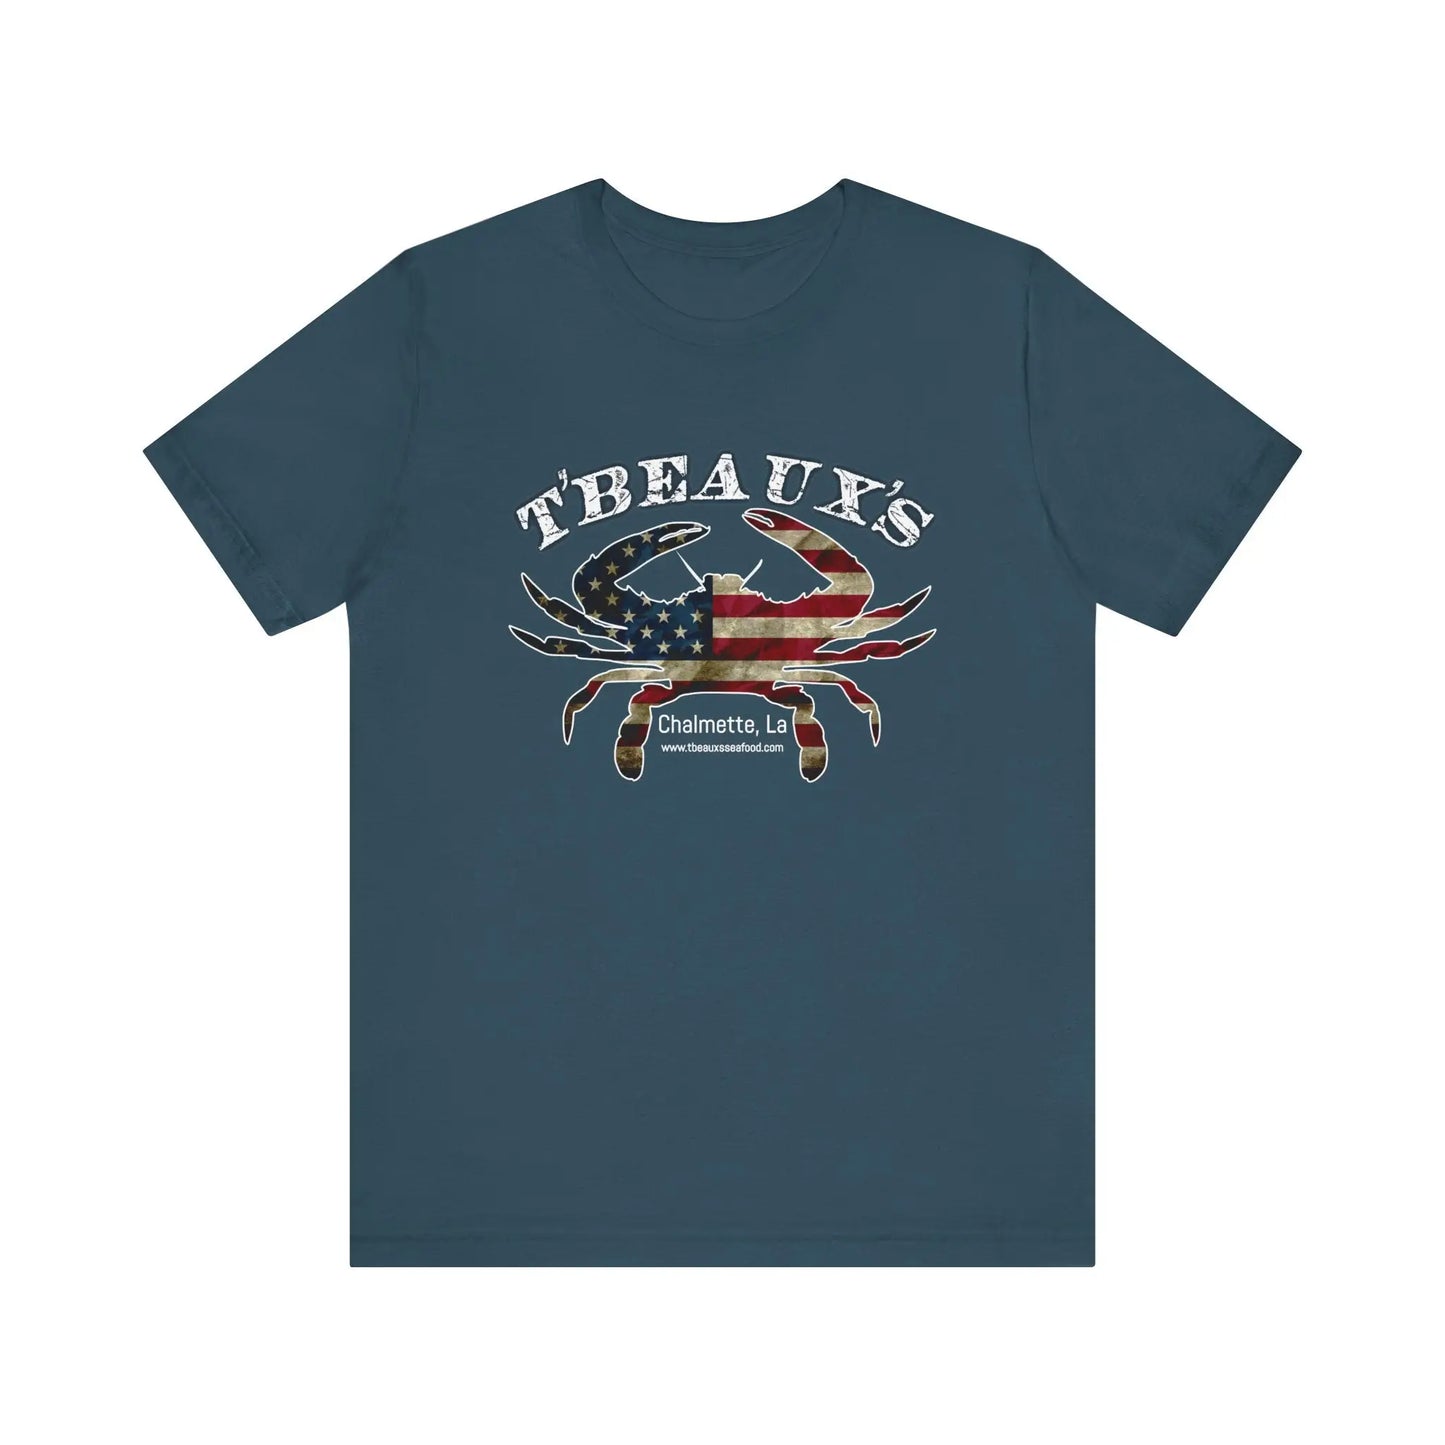 T'Beaux's Seafood Men's Short Sleeve Tee - Wicked Tees